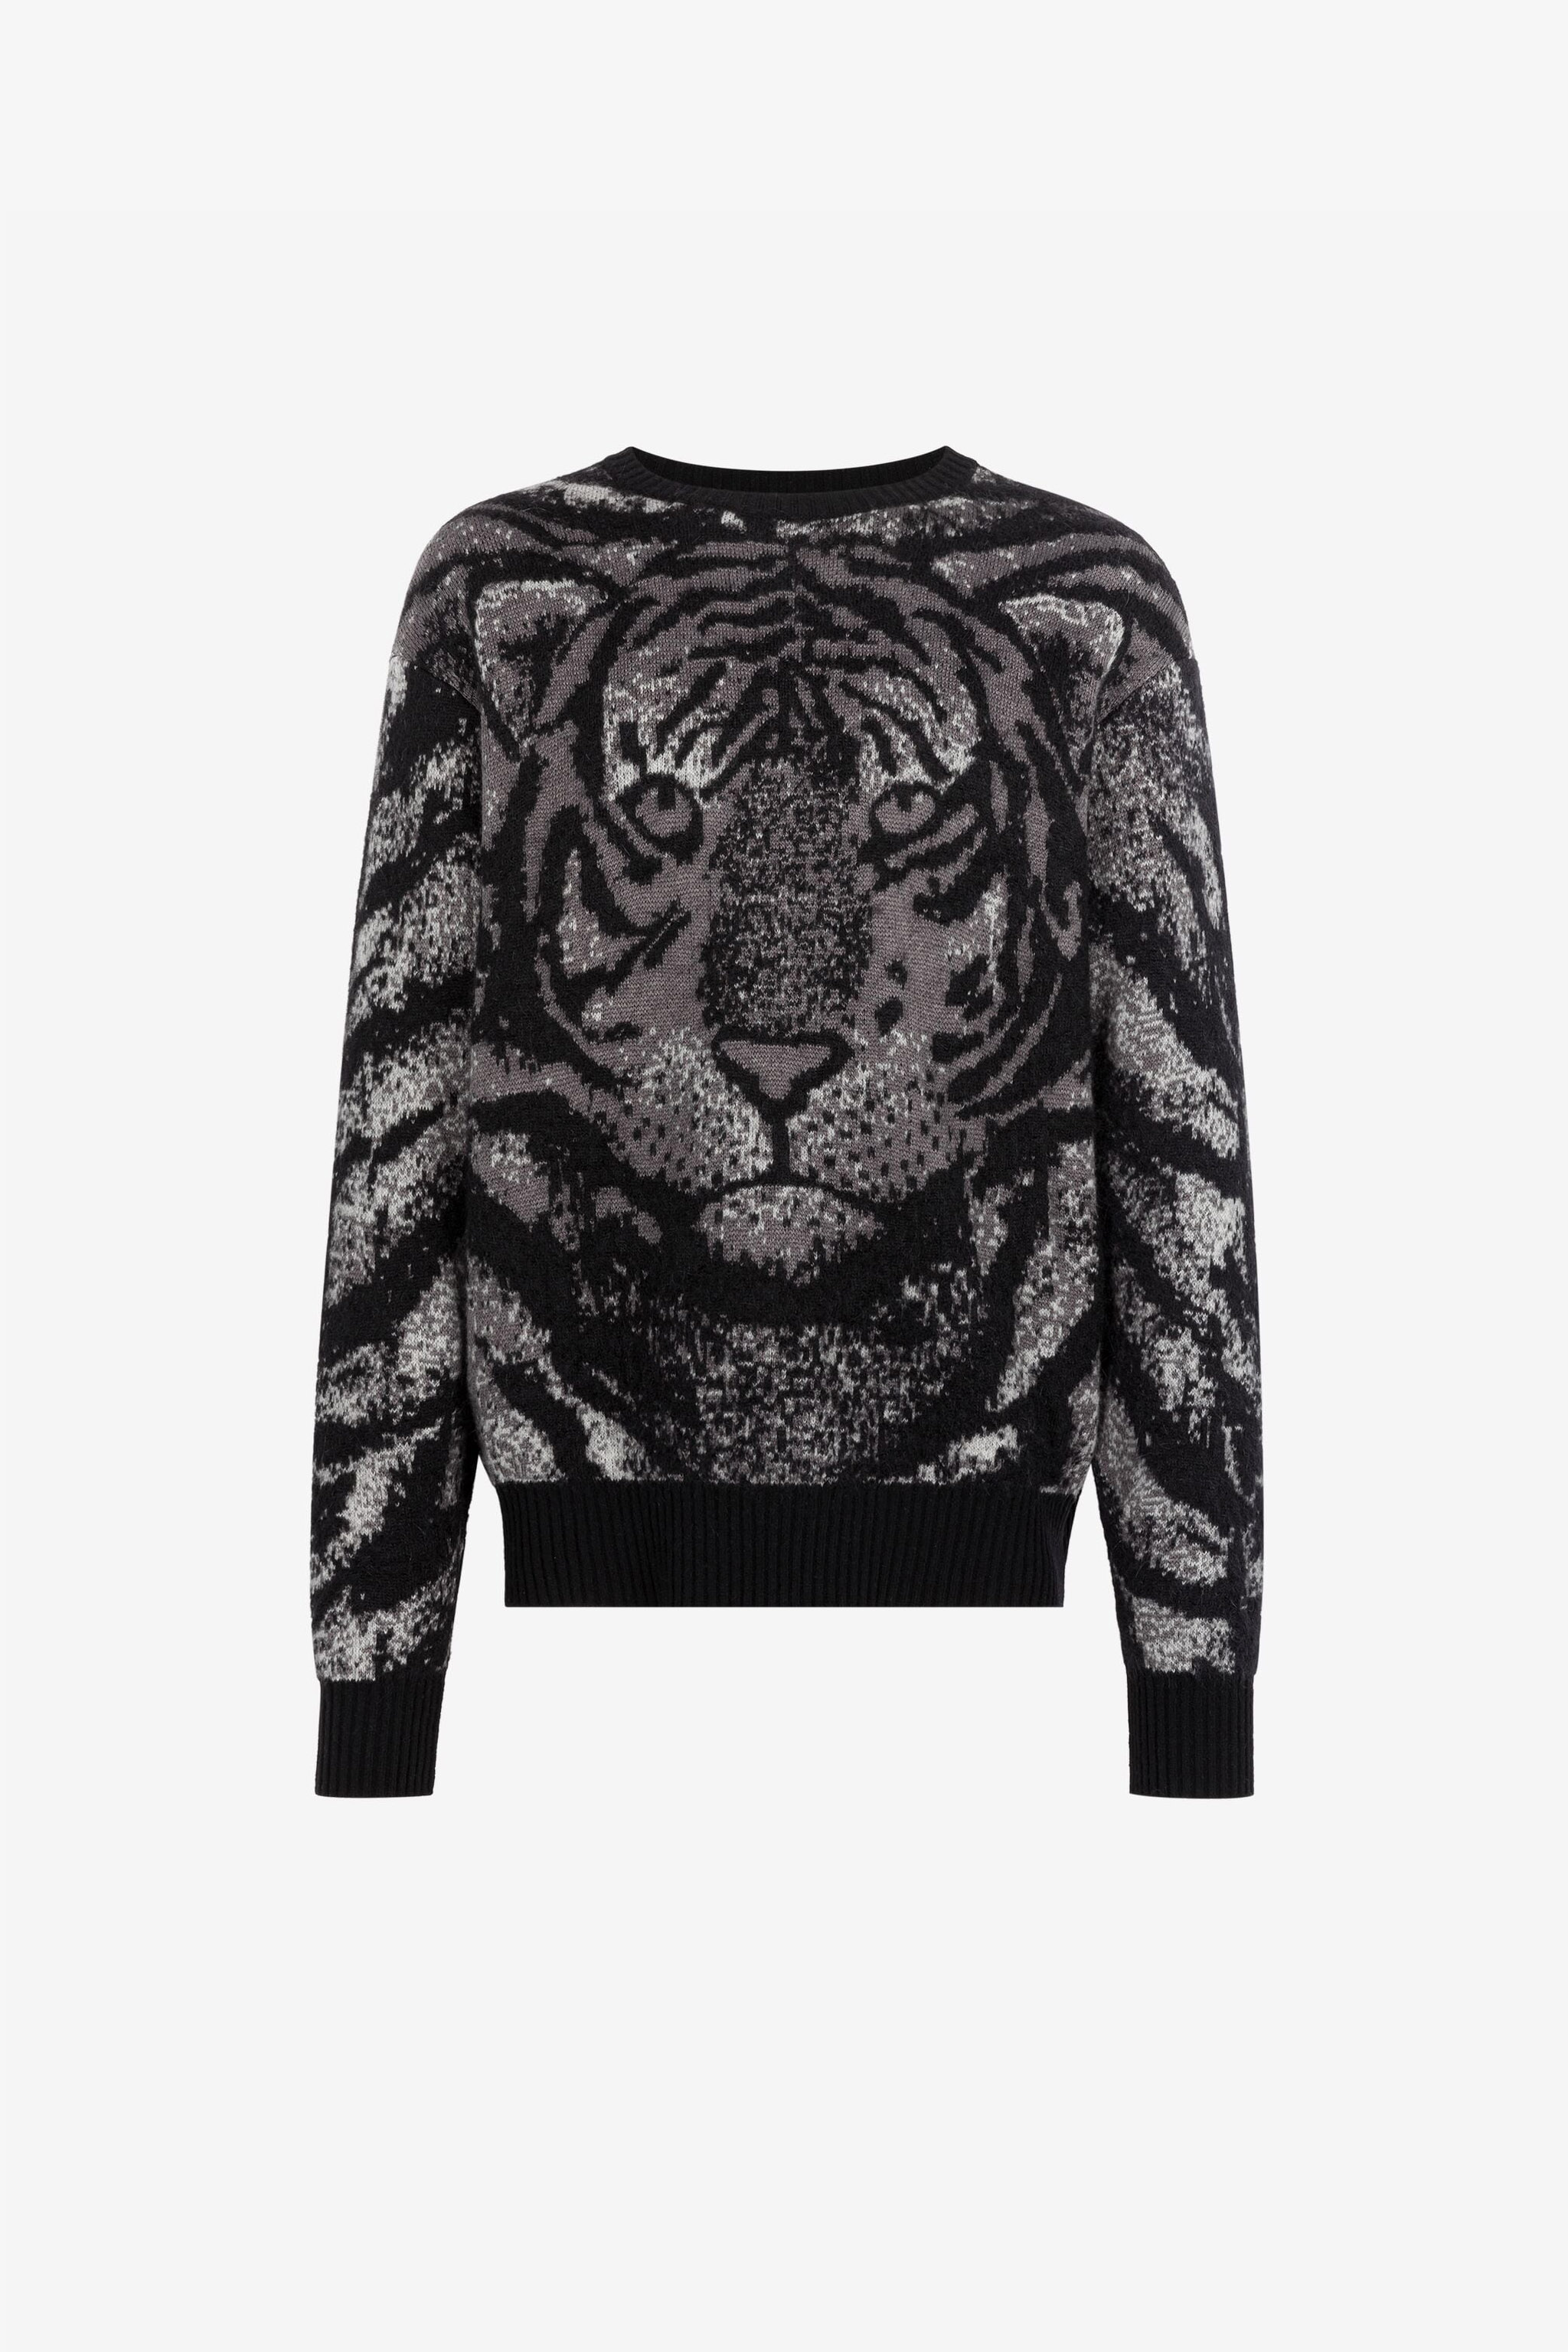 Tiger Intarsia Jumper - Luxury Knitwear and Sweatshirts - Ready to